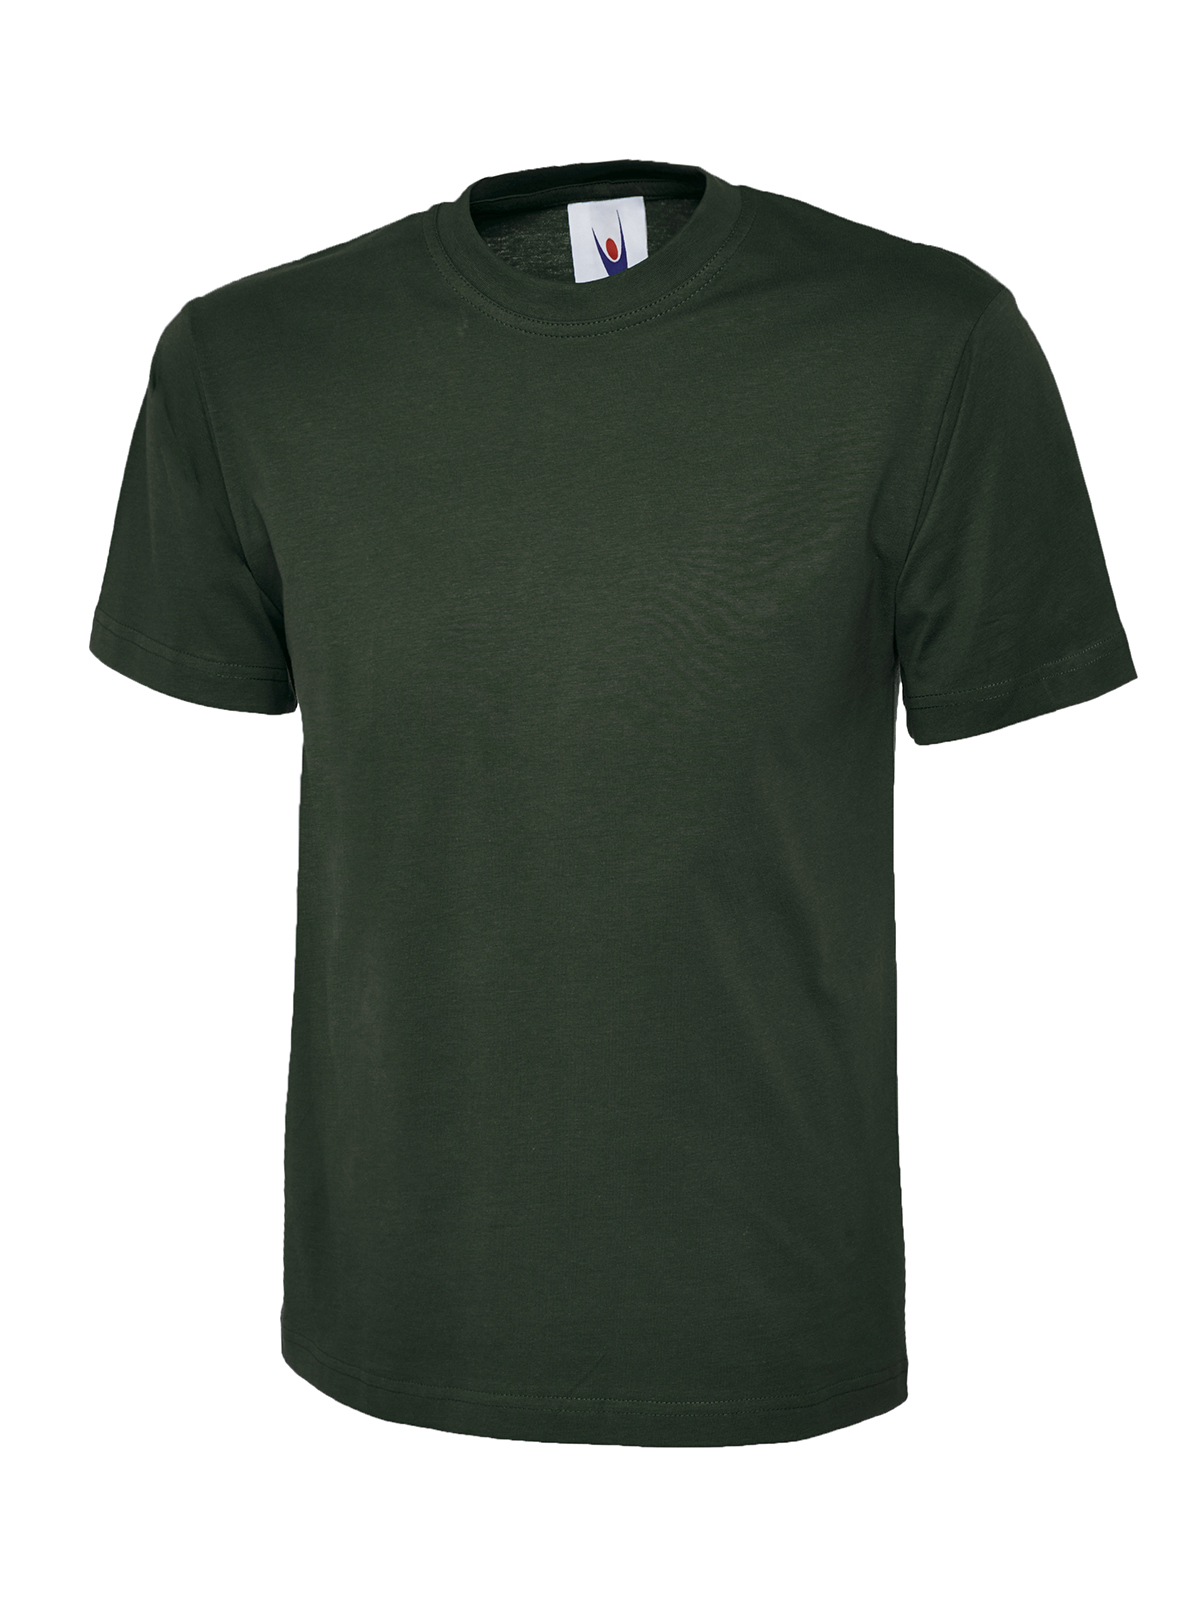 Uneek Herren T-Shirt Premium dunkelgrün